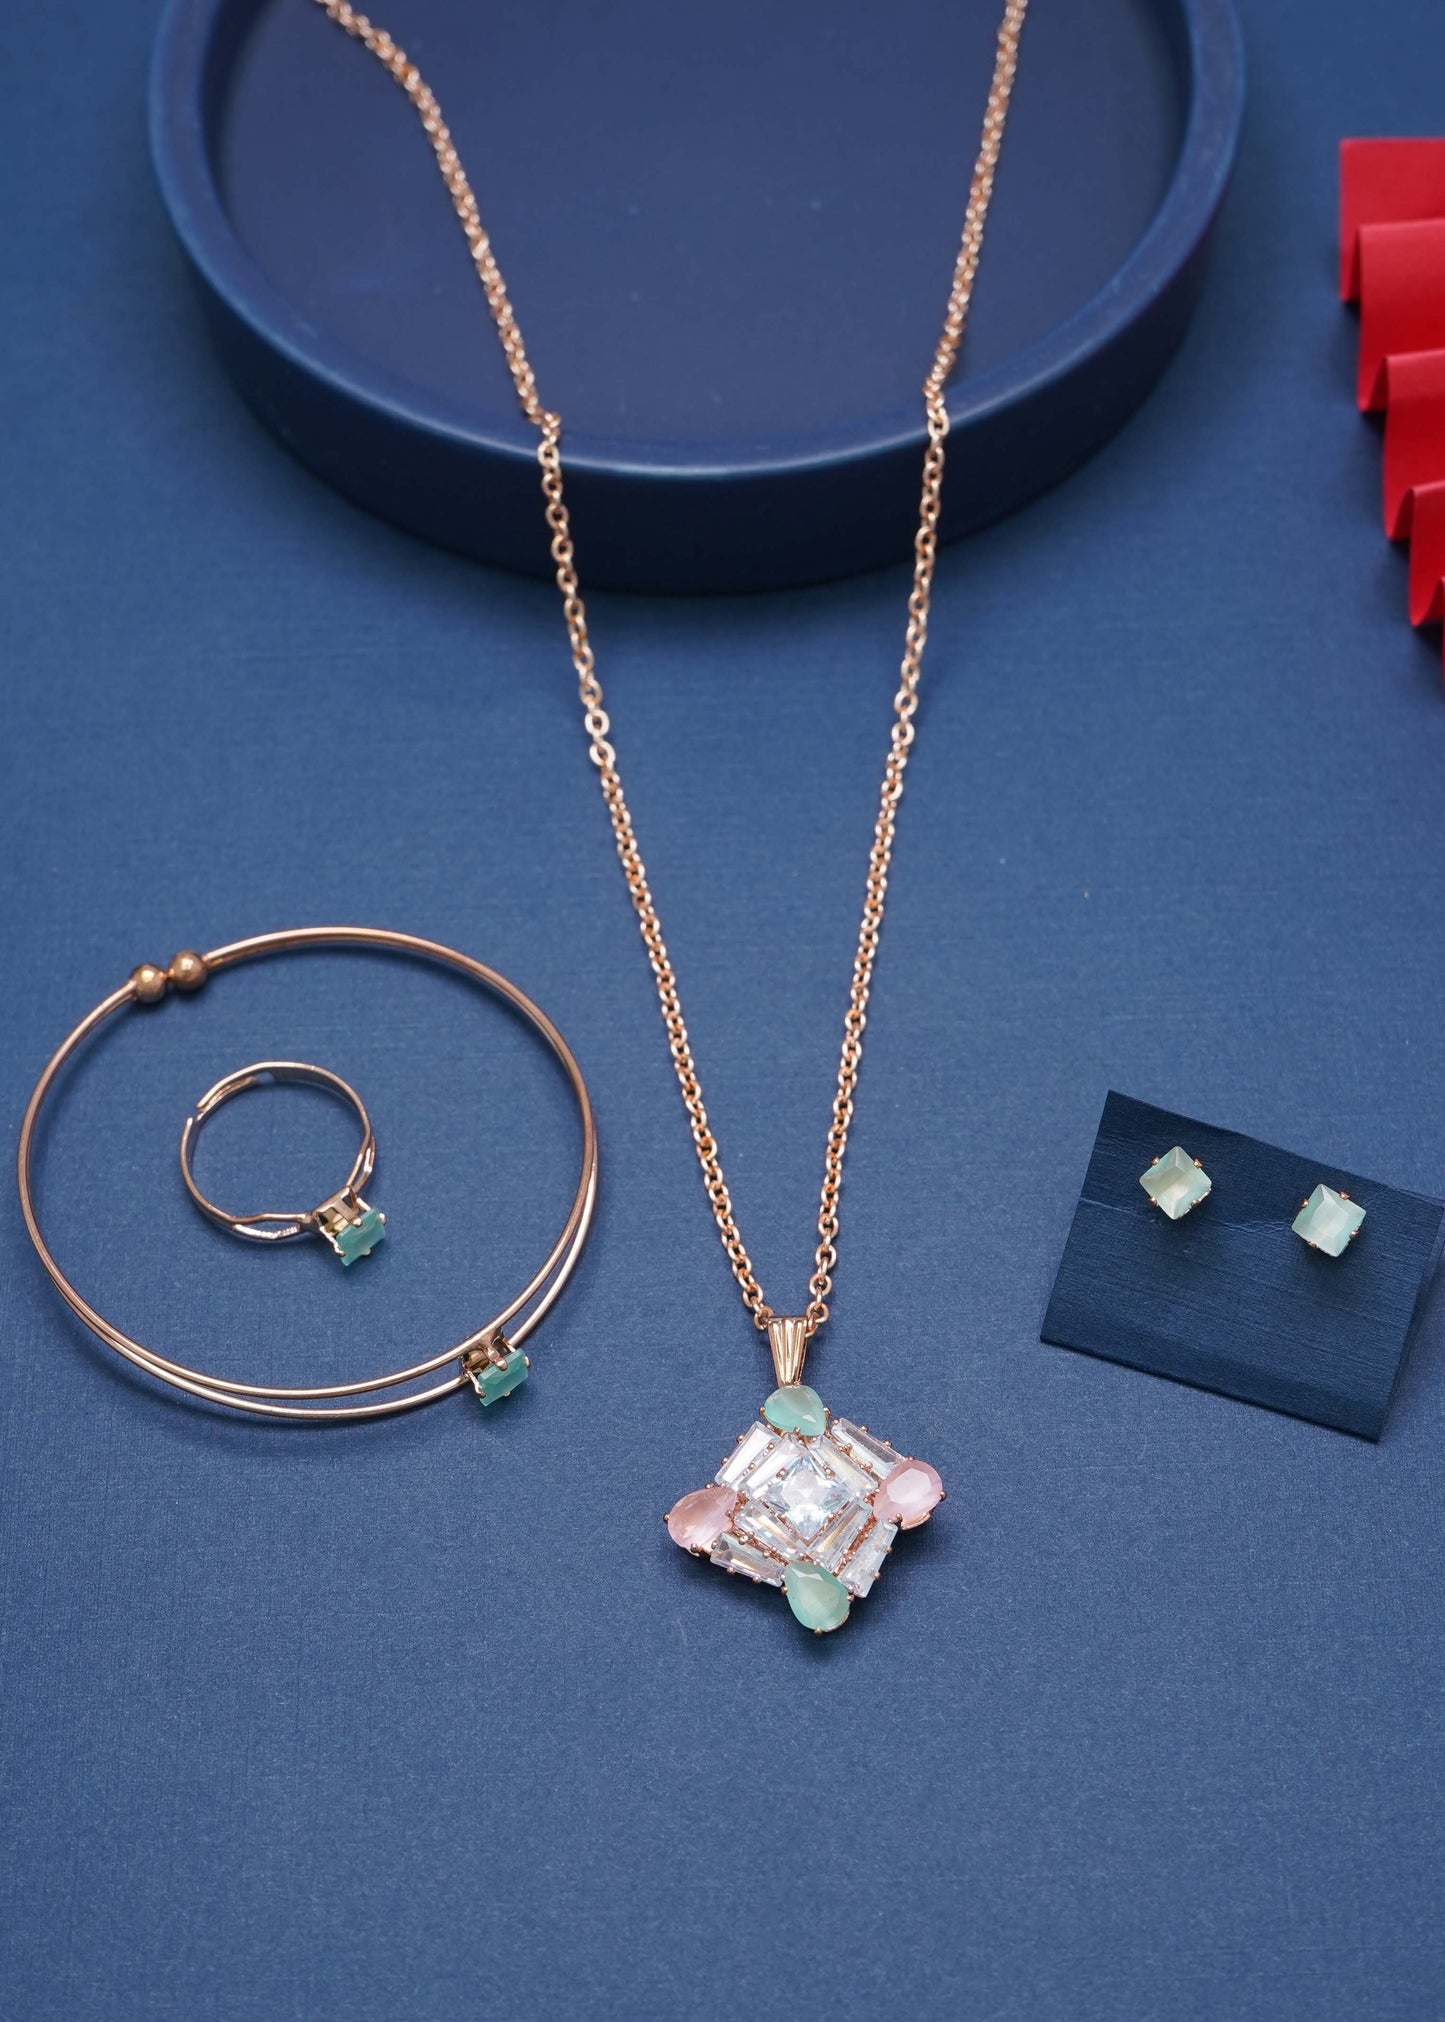 Diamond Studs Necklace Set: Elegant Beauty for Women and Girls!